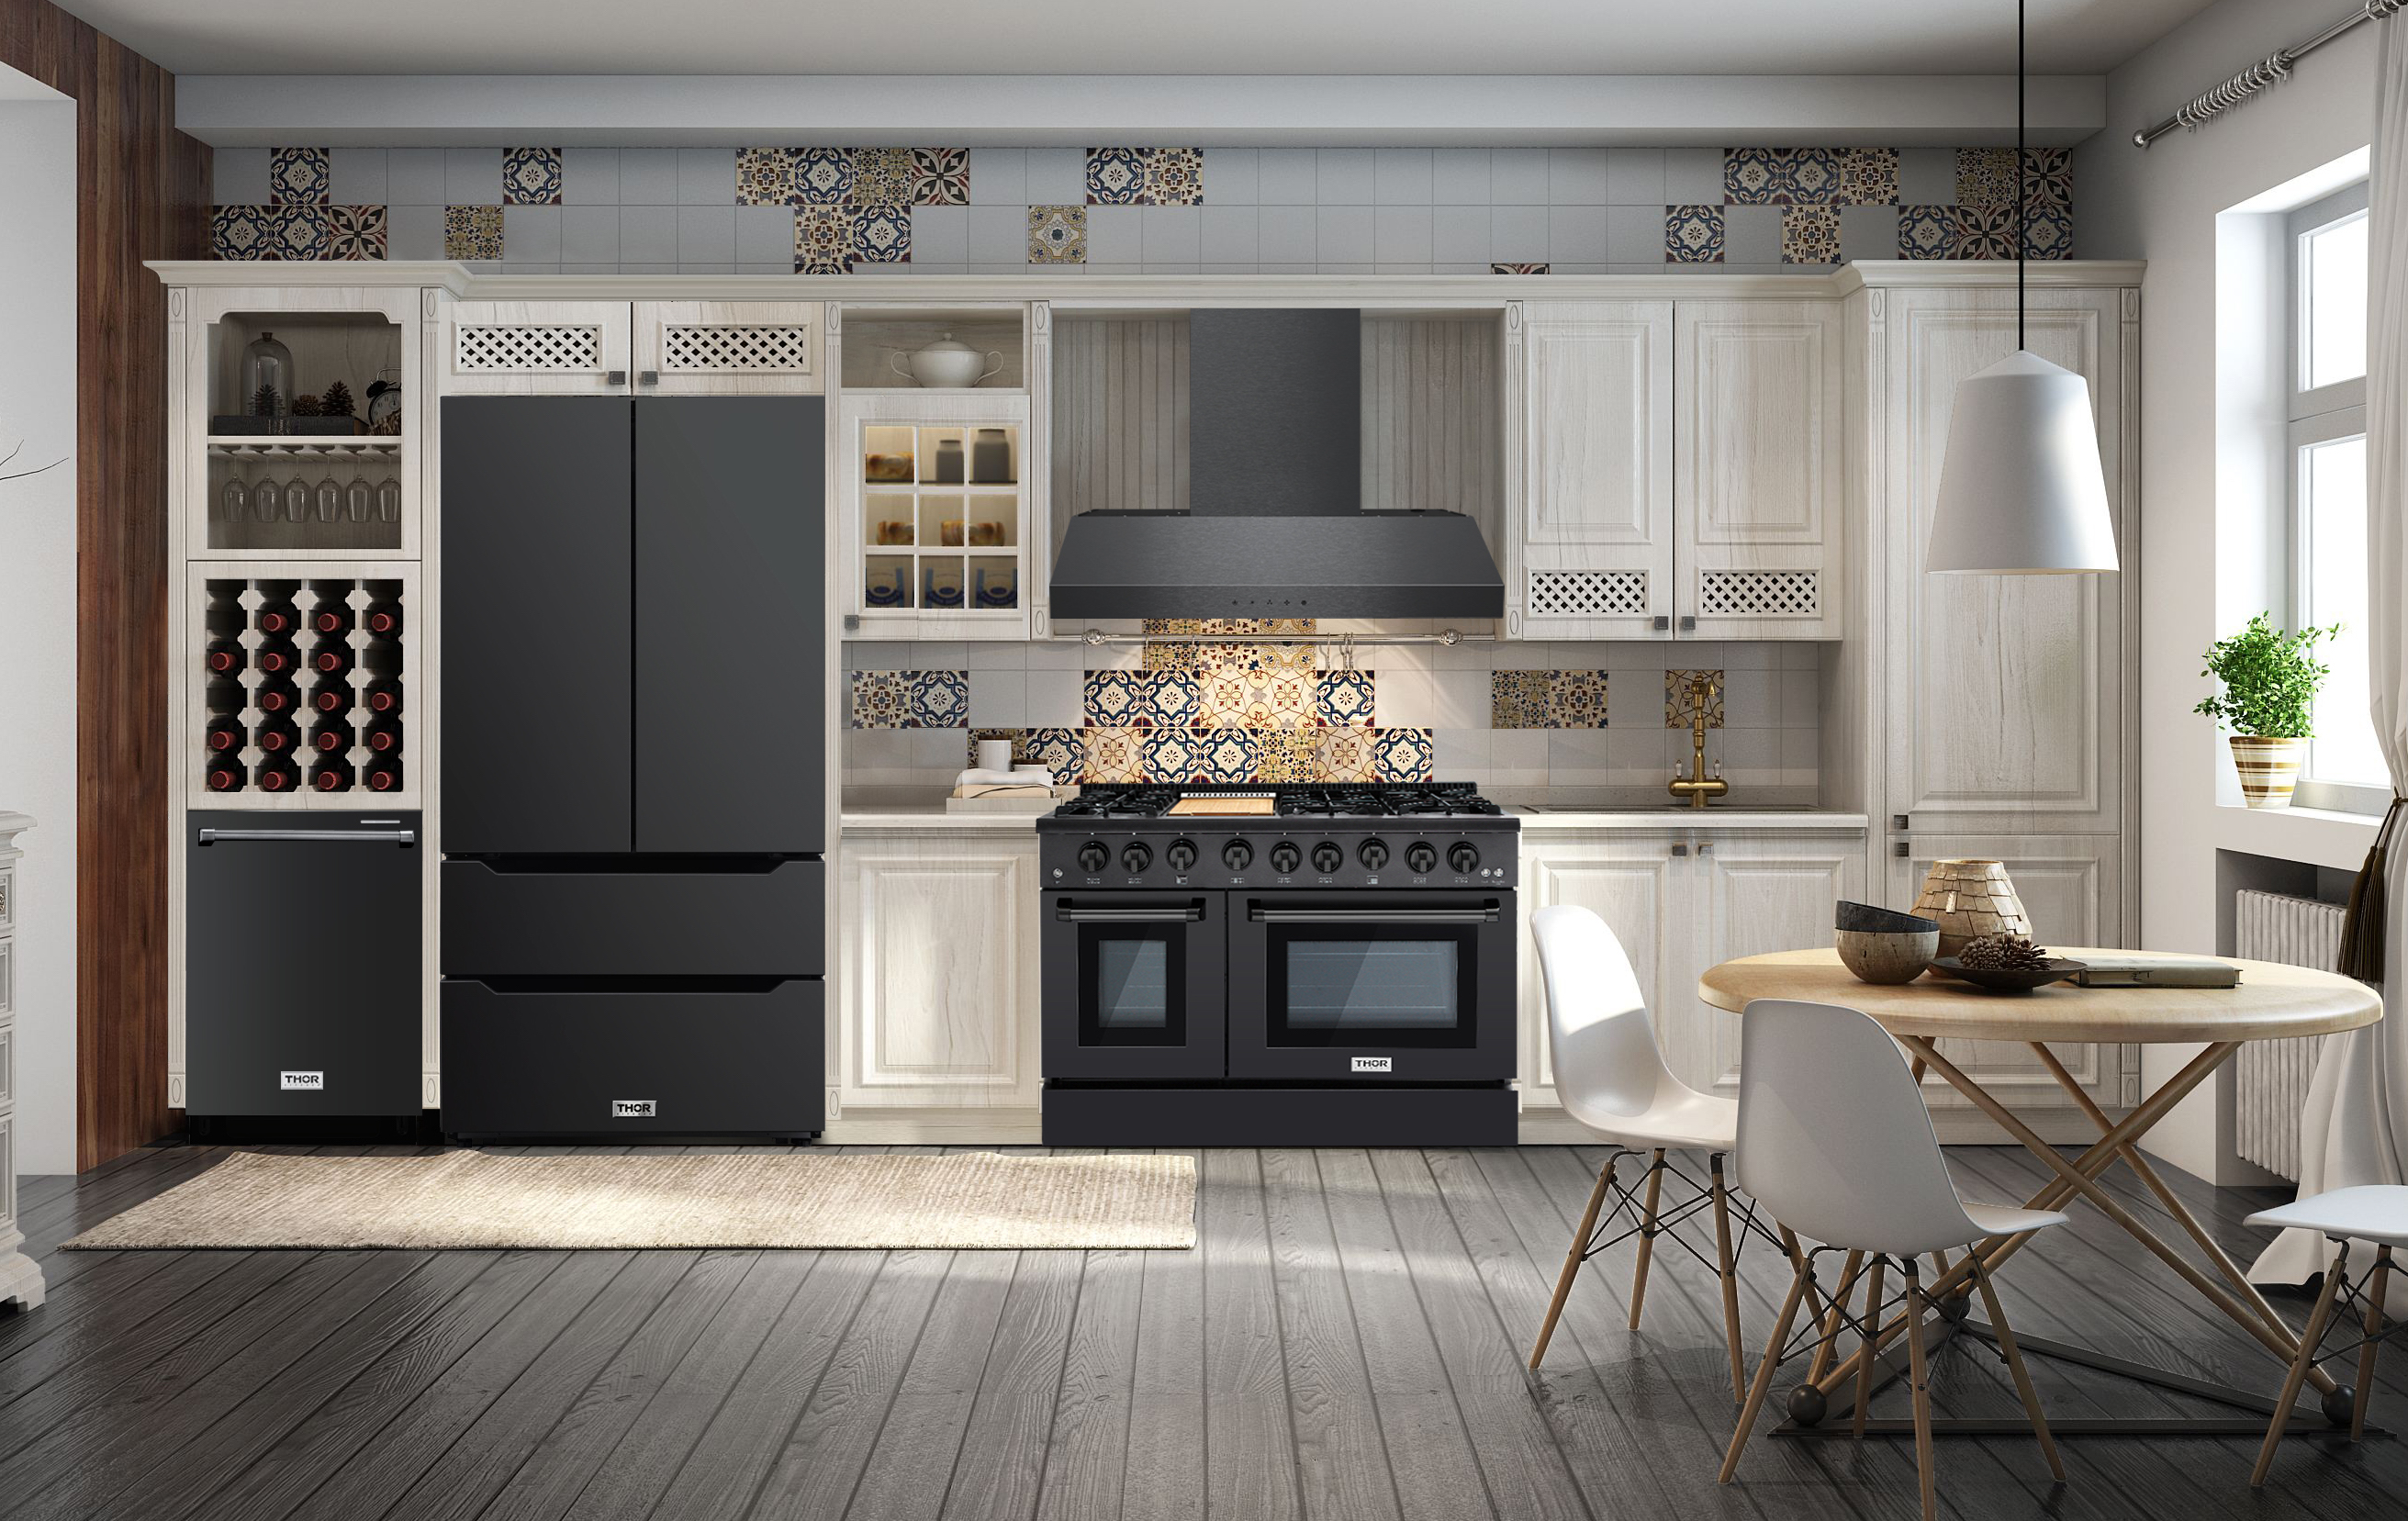 https://www.residentialproductsonline.com/sites/rpo/files/field/image/Thor-Kitchen-Black-Stainless-Steel-Suite-White-Kitchen.jpg